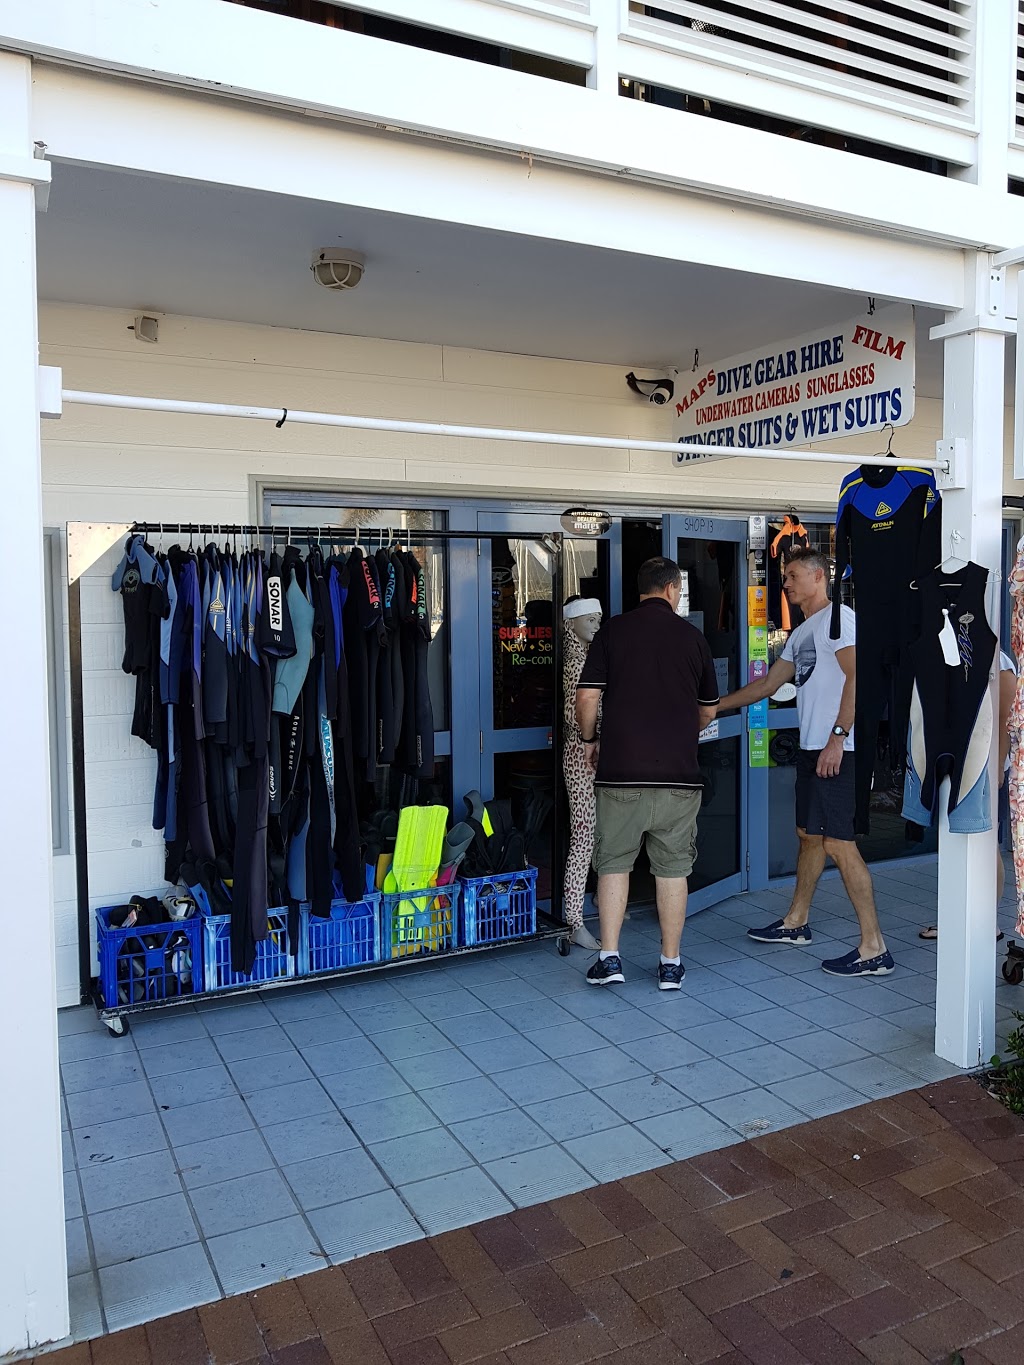 Aqua Dive Hire and Supplies | store | Abell Point Marina, 13 Shingley Dr, Airlie Beach QLD 4802, Australia | 0749464074 OR +61 7 4946 4074